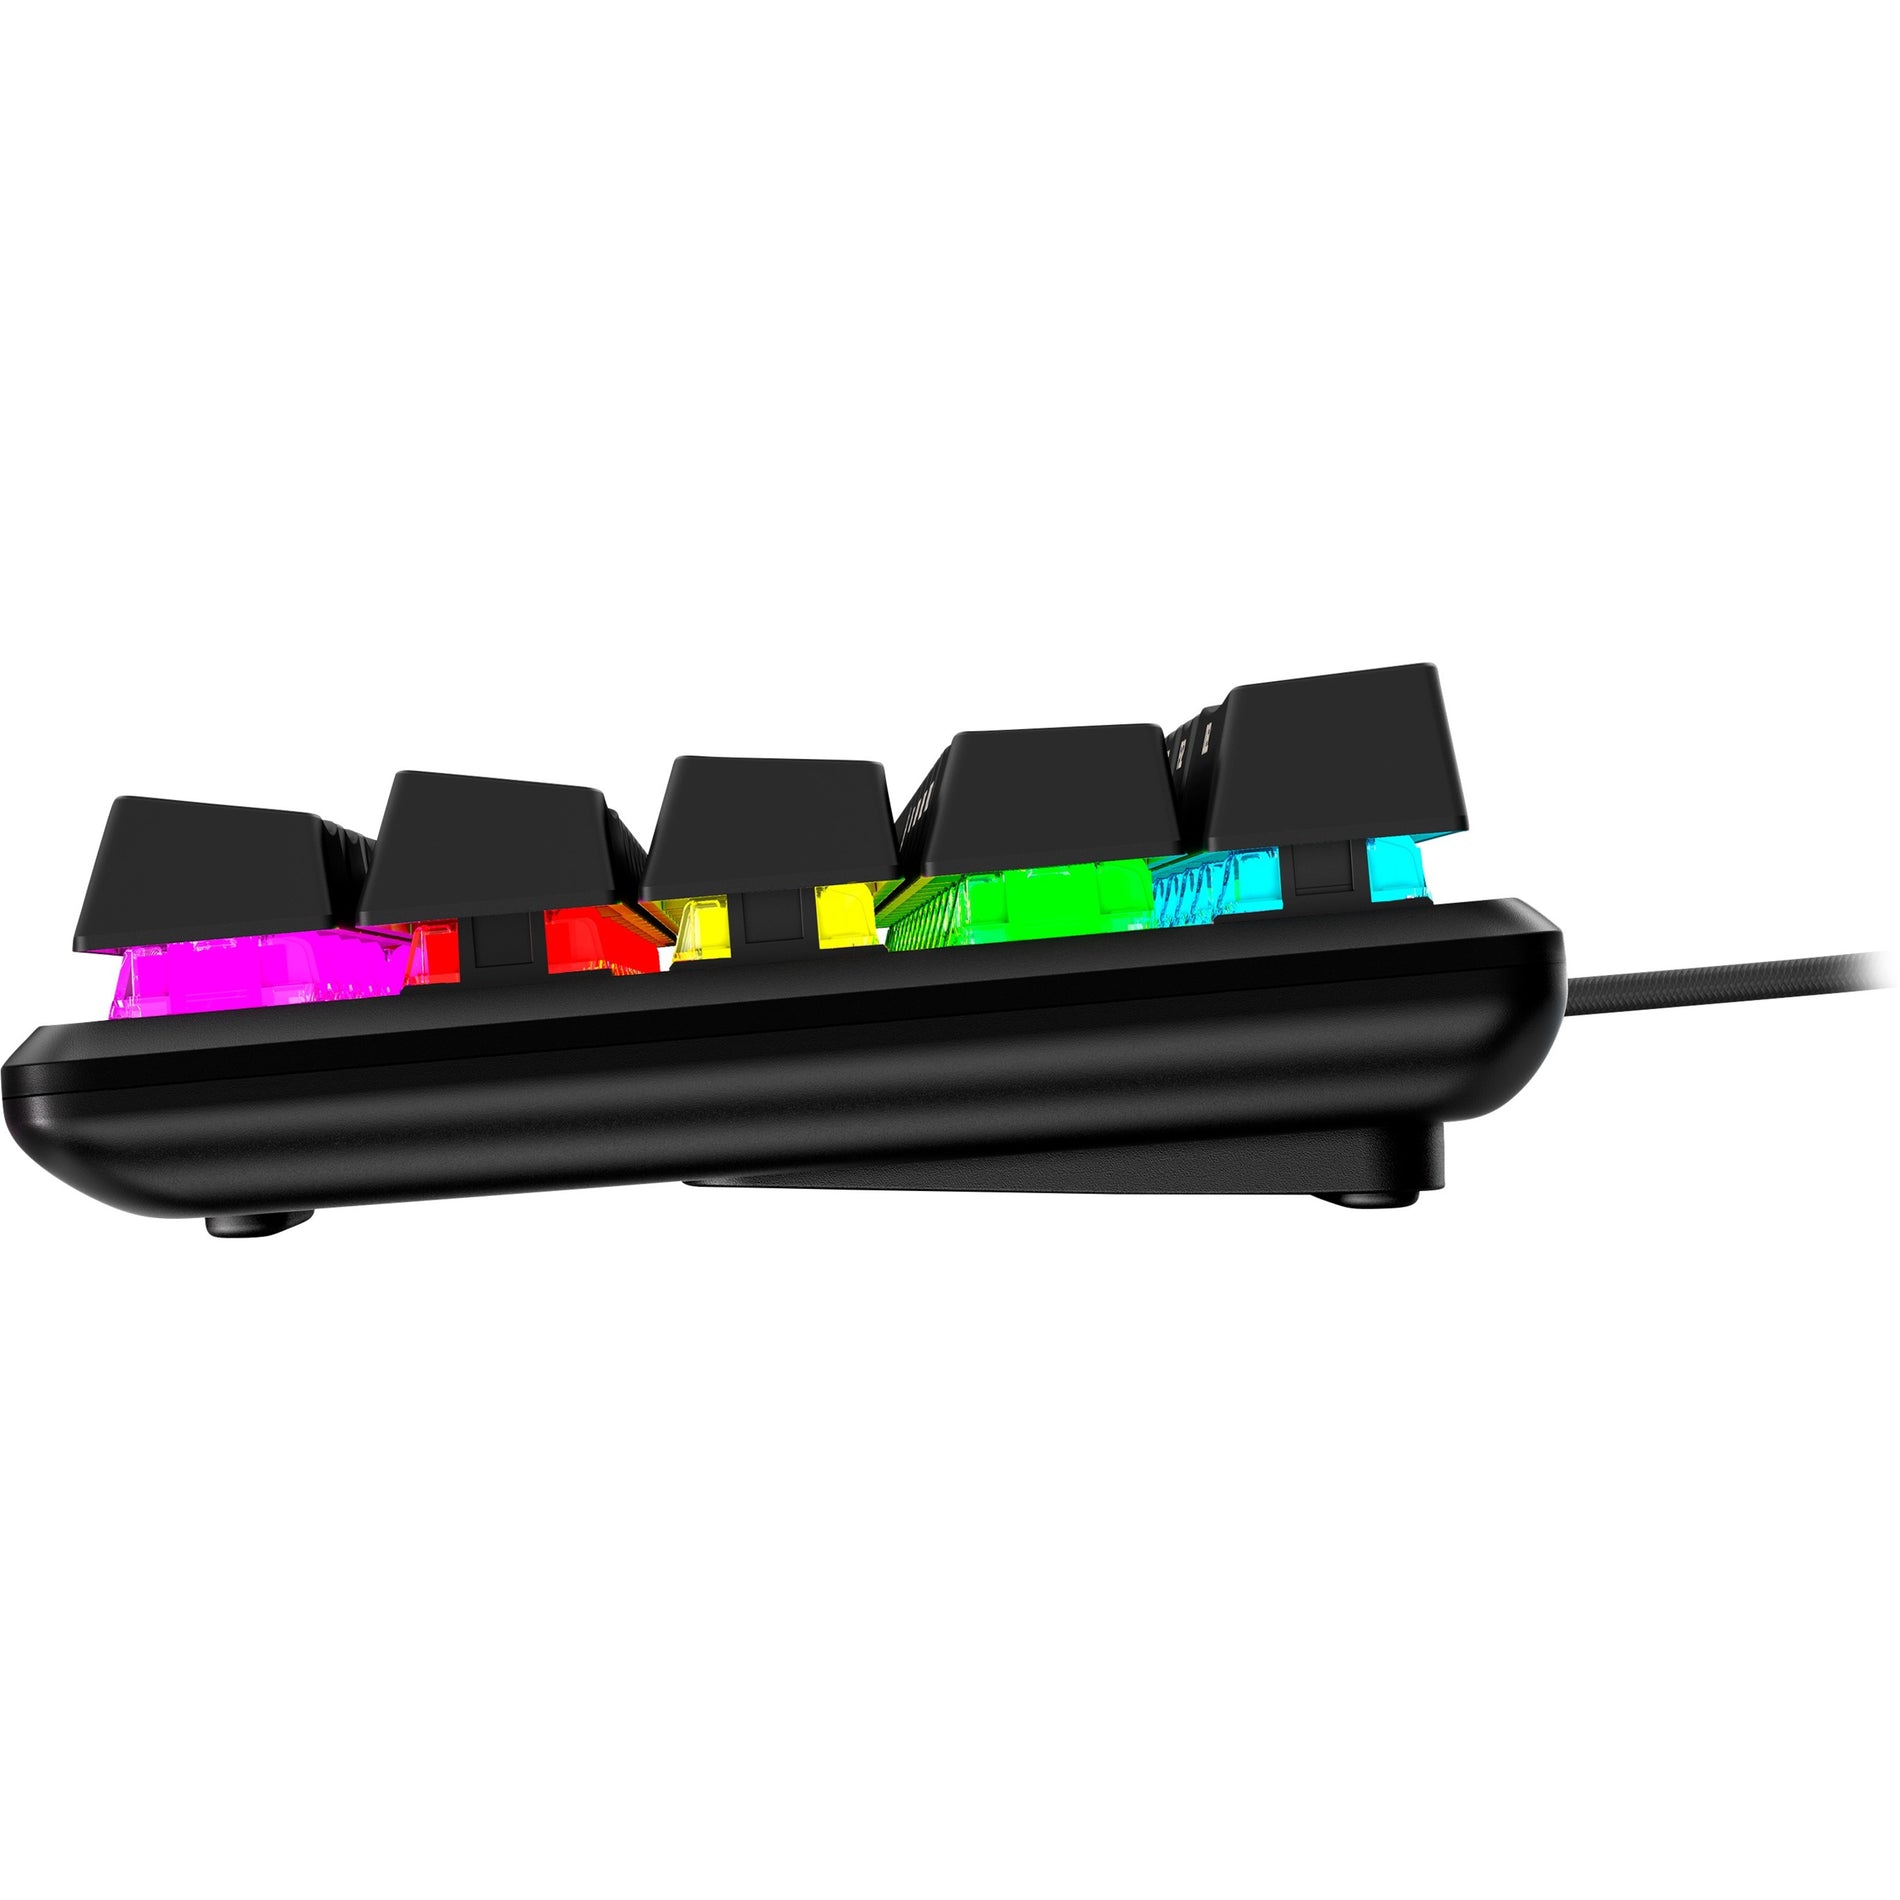 HyperX Alloy Origins 60 Percent Mechanical Gaming Keyboard, RGB LED Backlight, Compact Keyboard, Adjustable Tilt